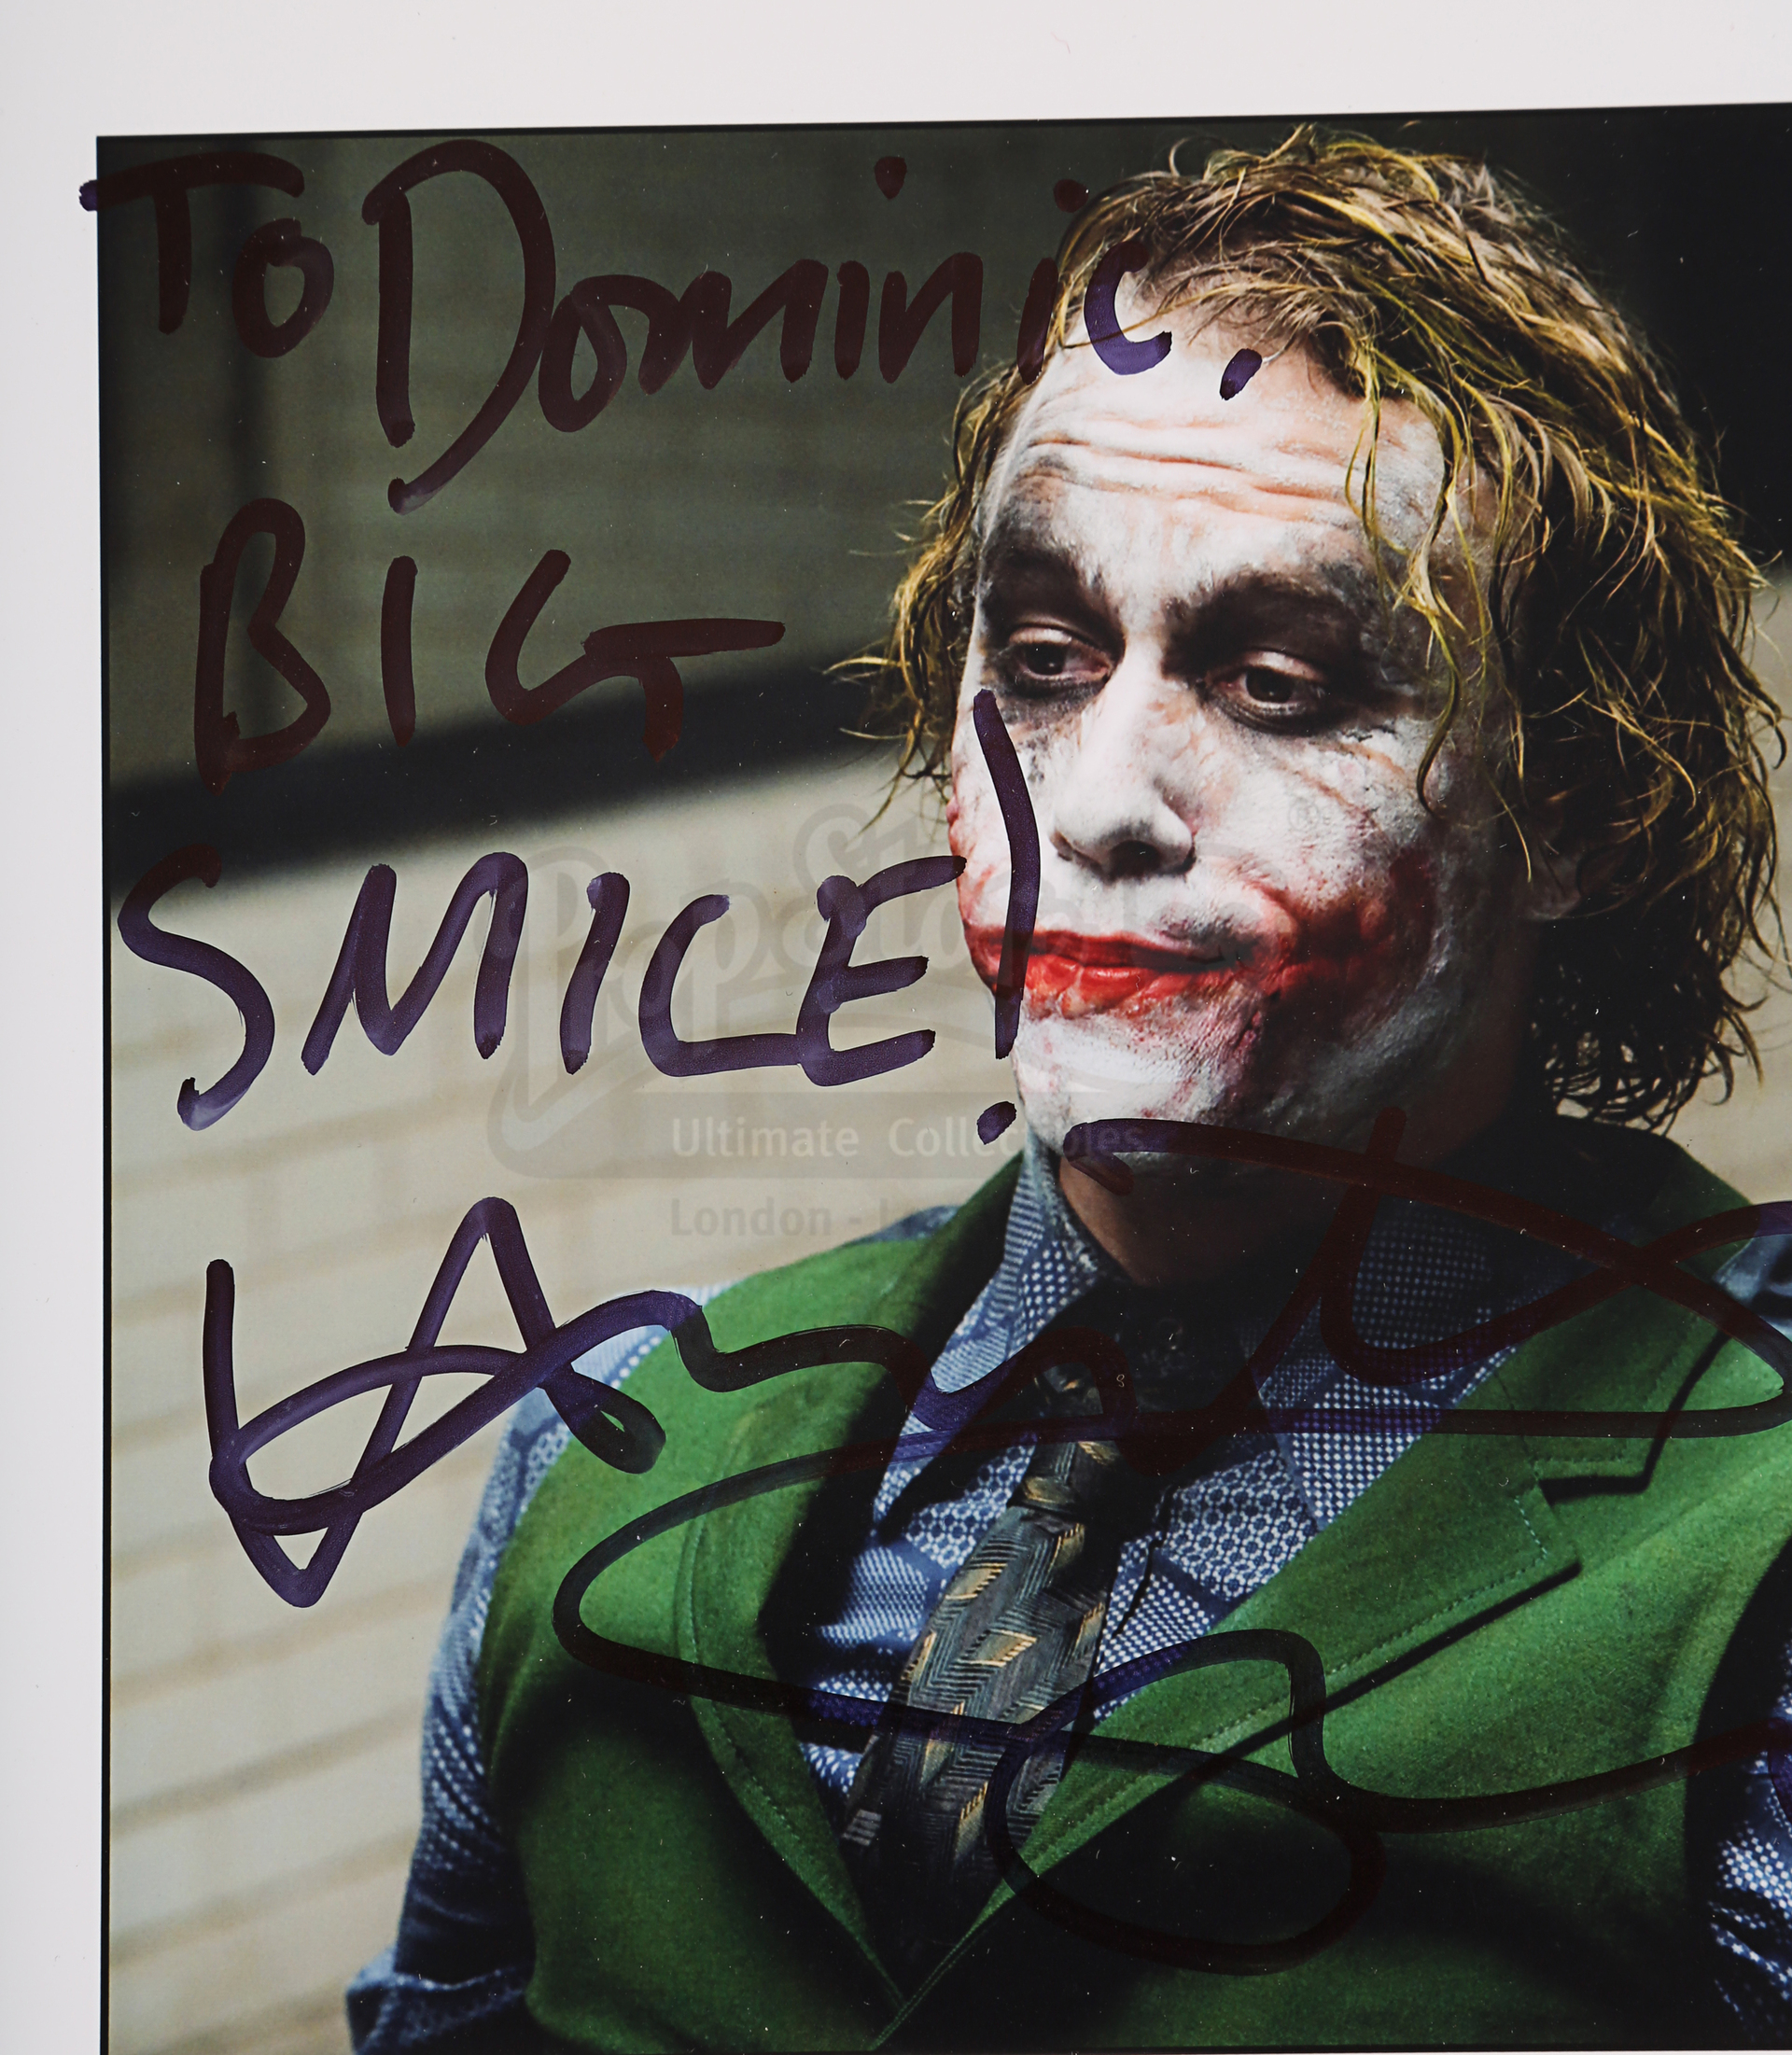 THE DARK KNIGHT (2008) - Heath Ledger 'Joker' Autographed Still - Image 2 of 3